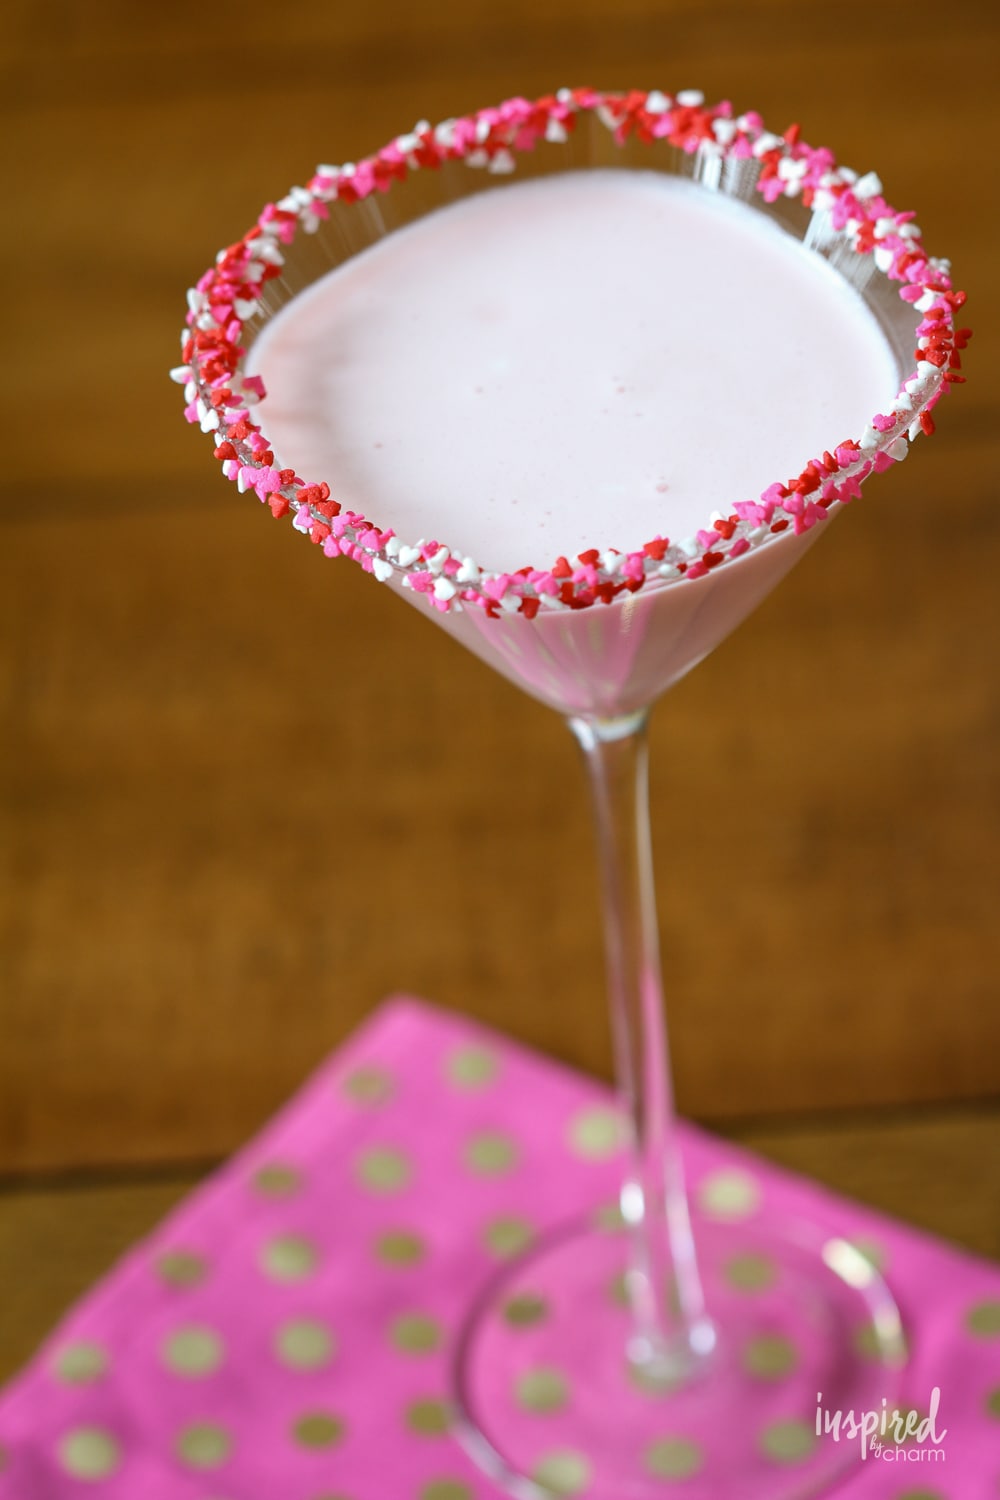 martini for Valentine's Day with sprinkle garnish.